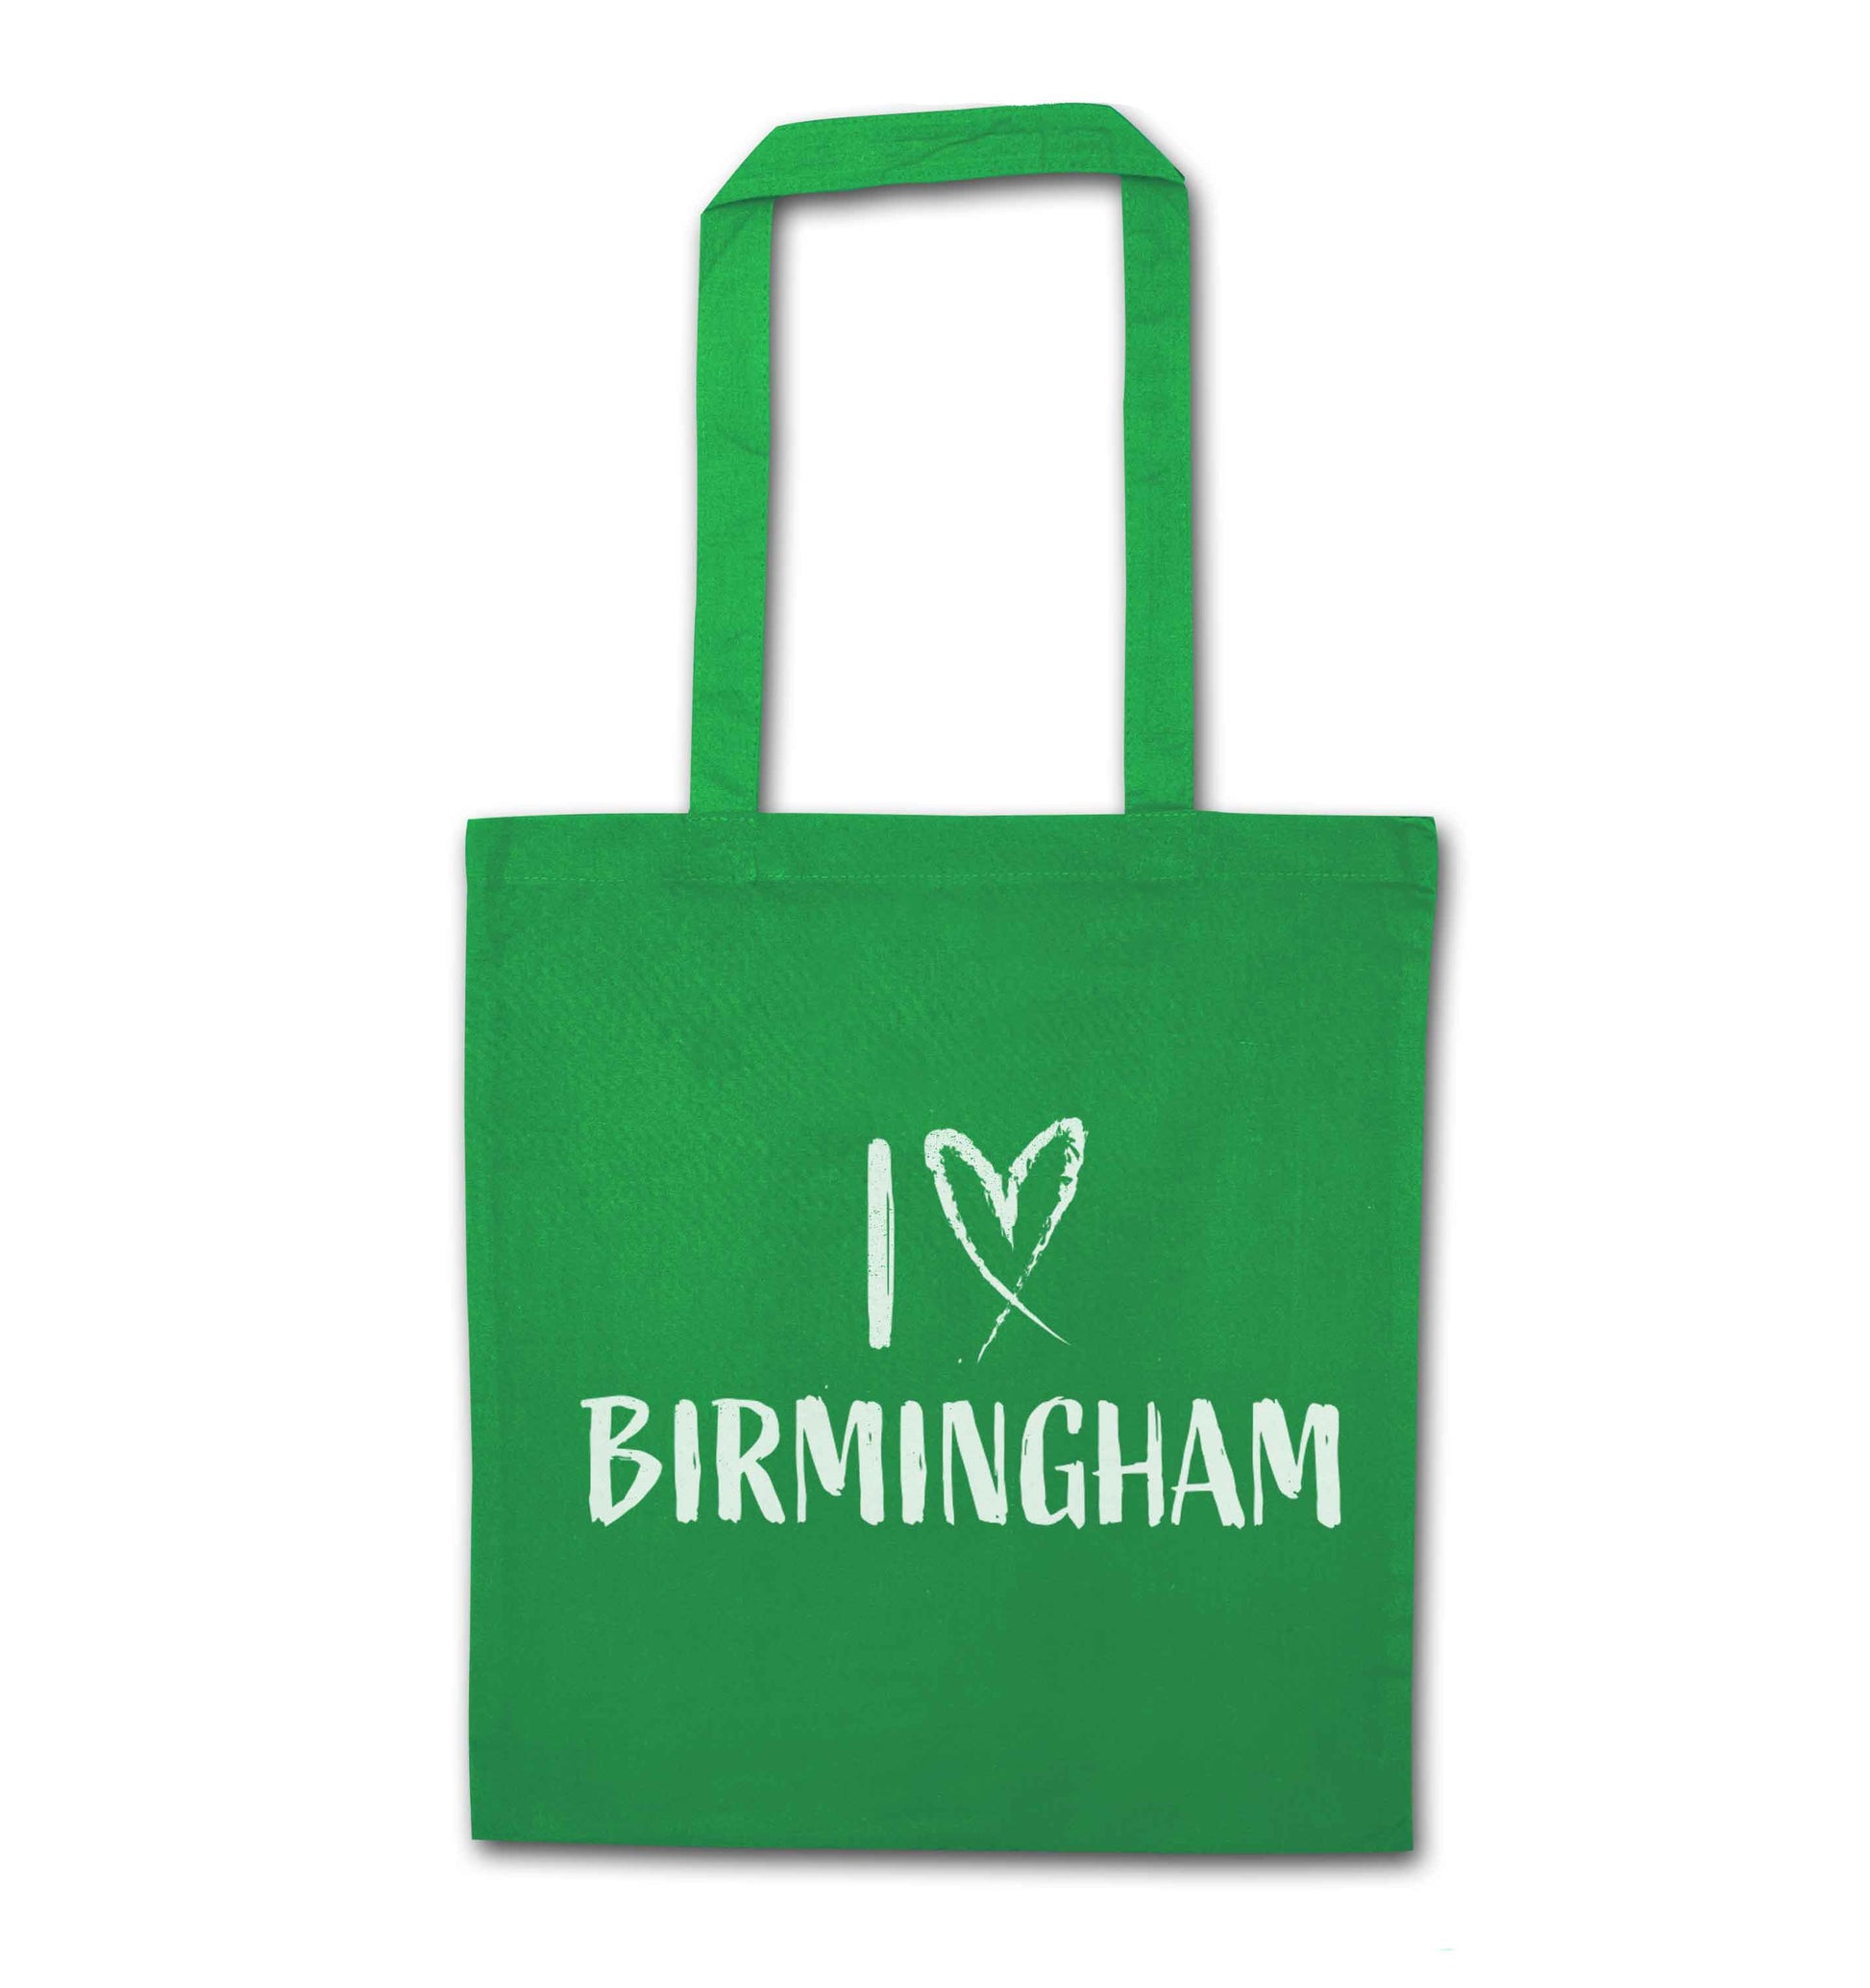 I love Birmingham green tote bag